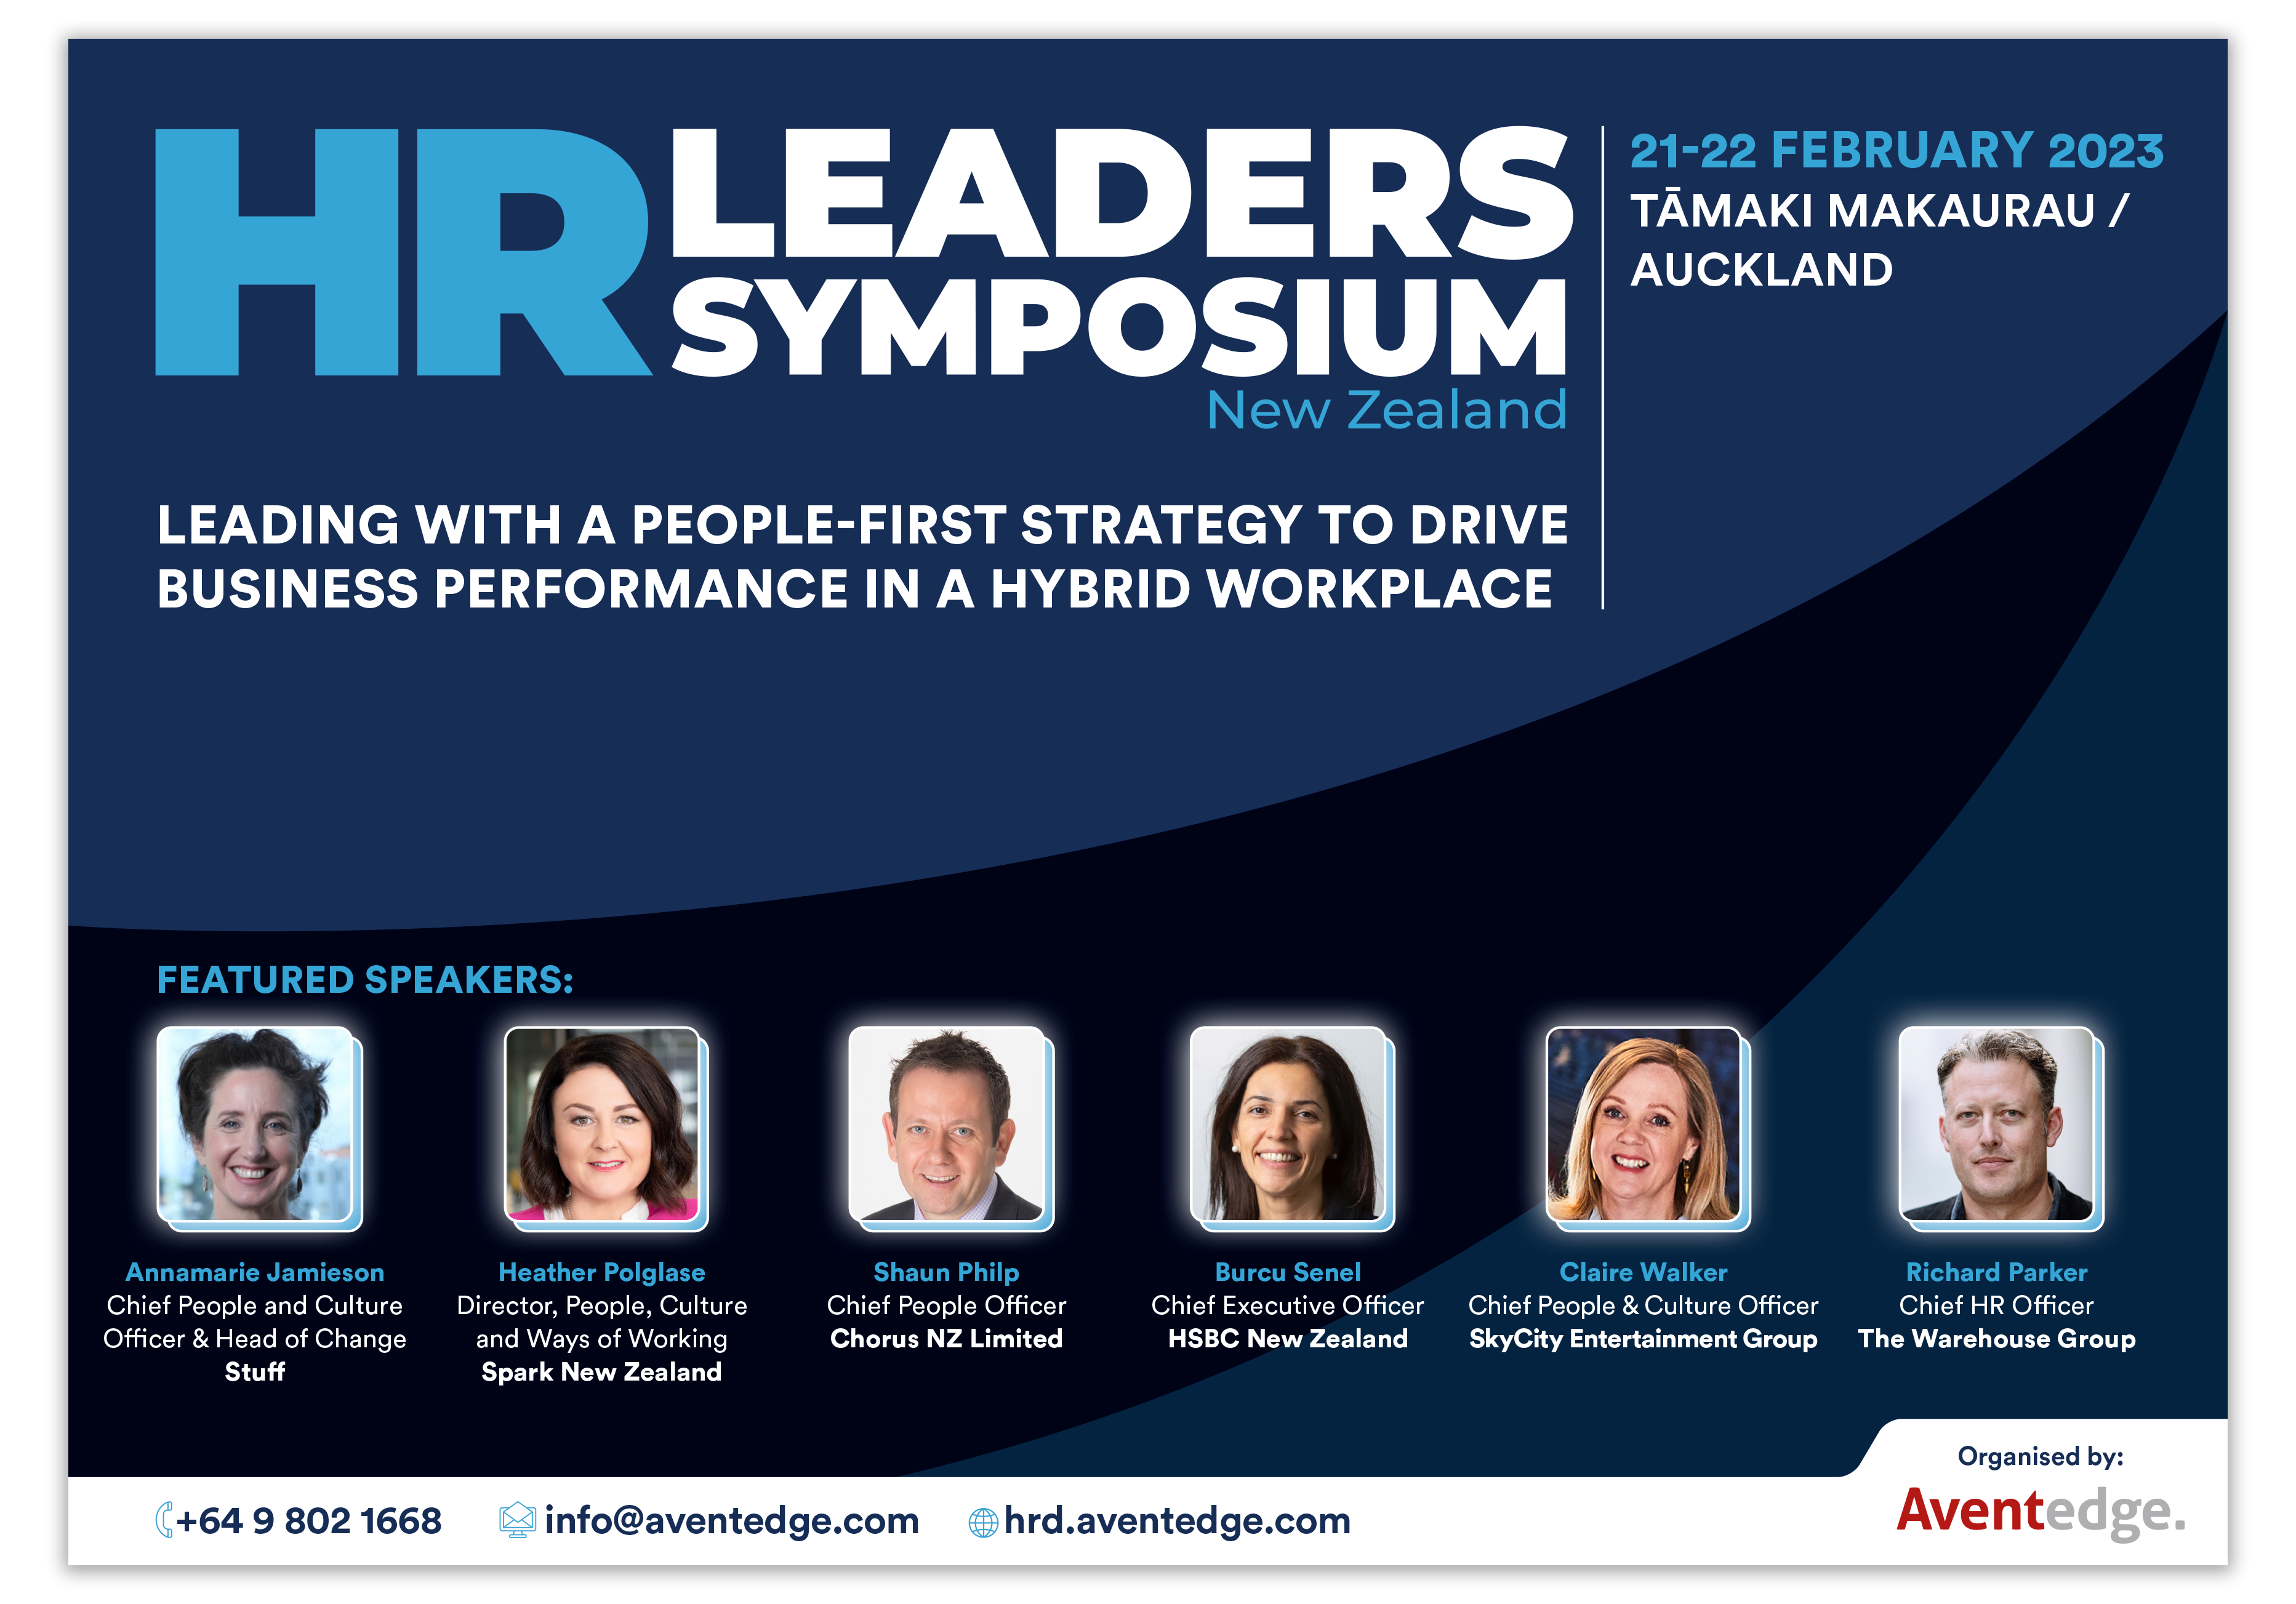 HR Leaders Symposium